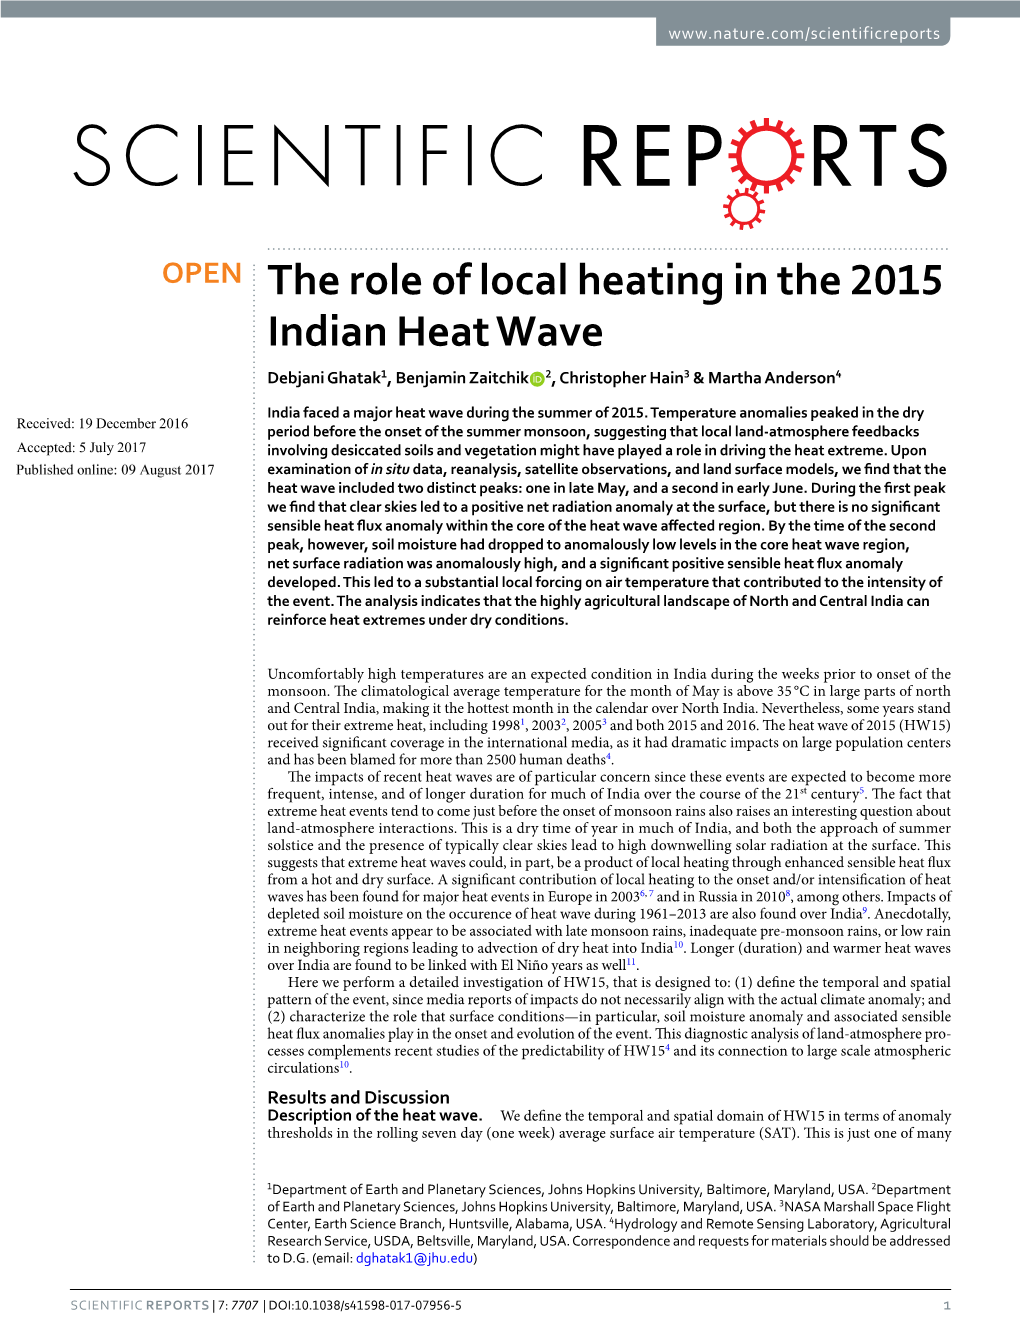 The Role of Local Heating in the 2015 Indian Heat Wave Debjani Ghatak1, Benjamin Zaitchik 2, Christopher Hain3 & Martha Anderson4